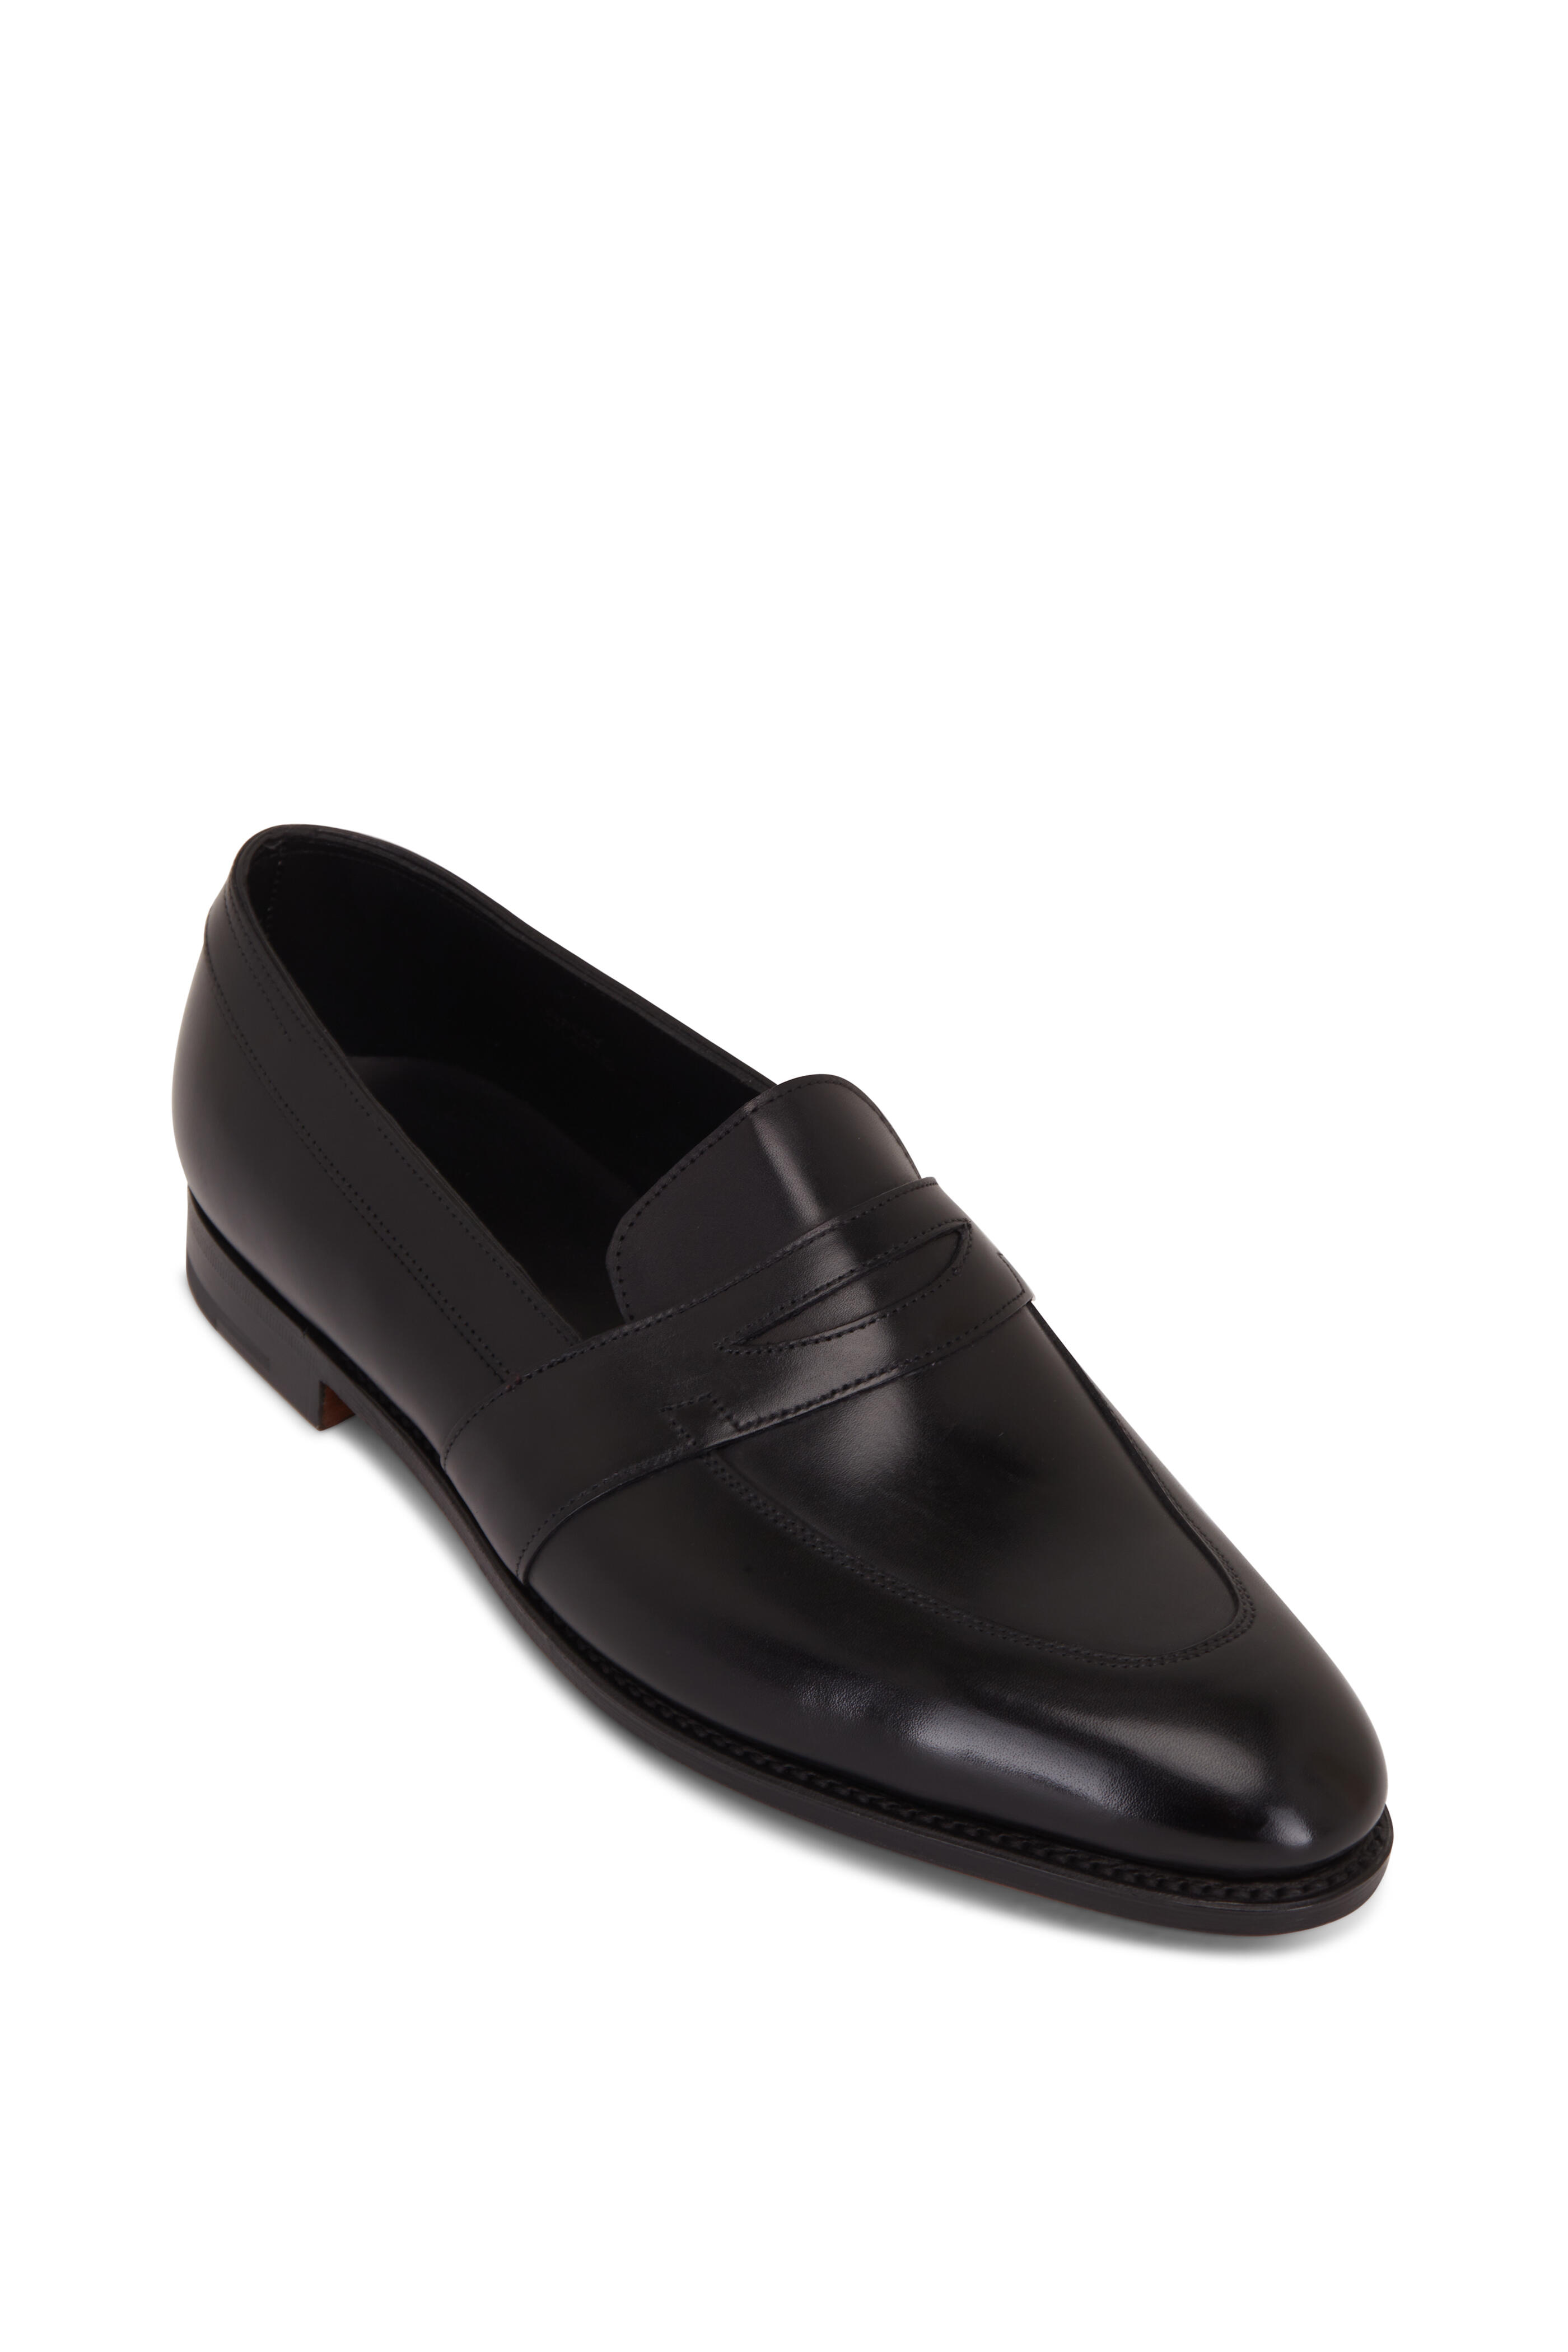 John Lobb - Adley Black Leather Dress Shoe | Mitchell Stores